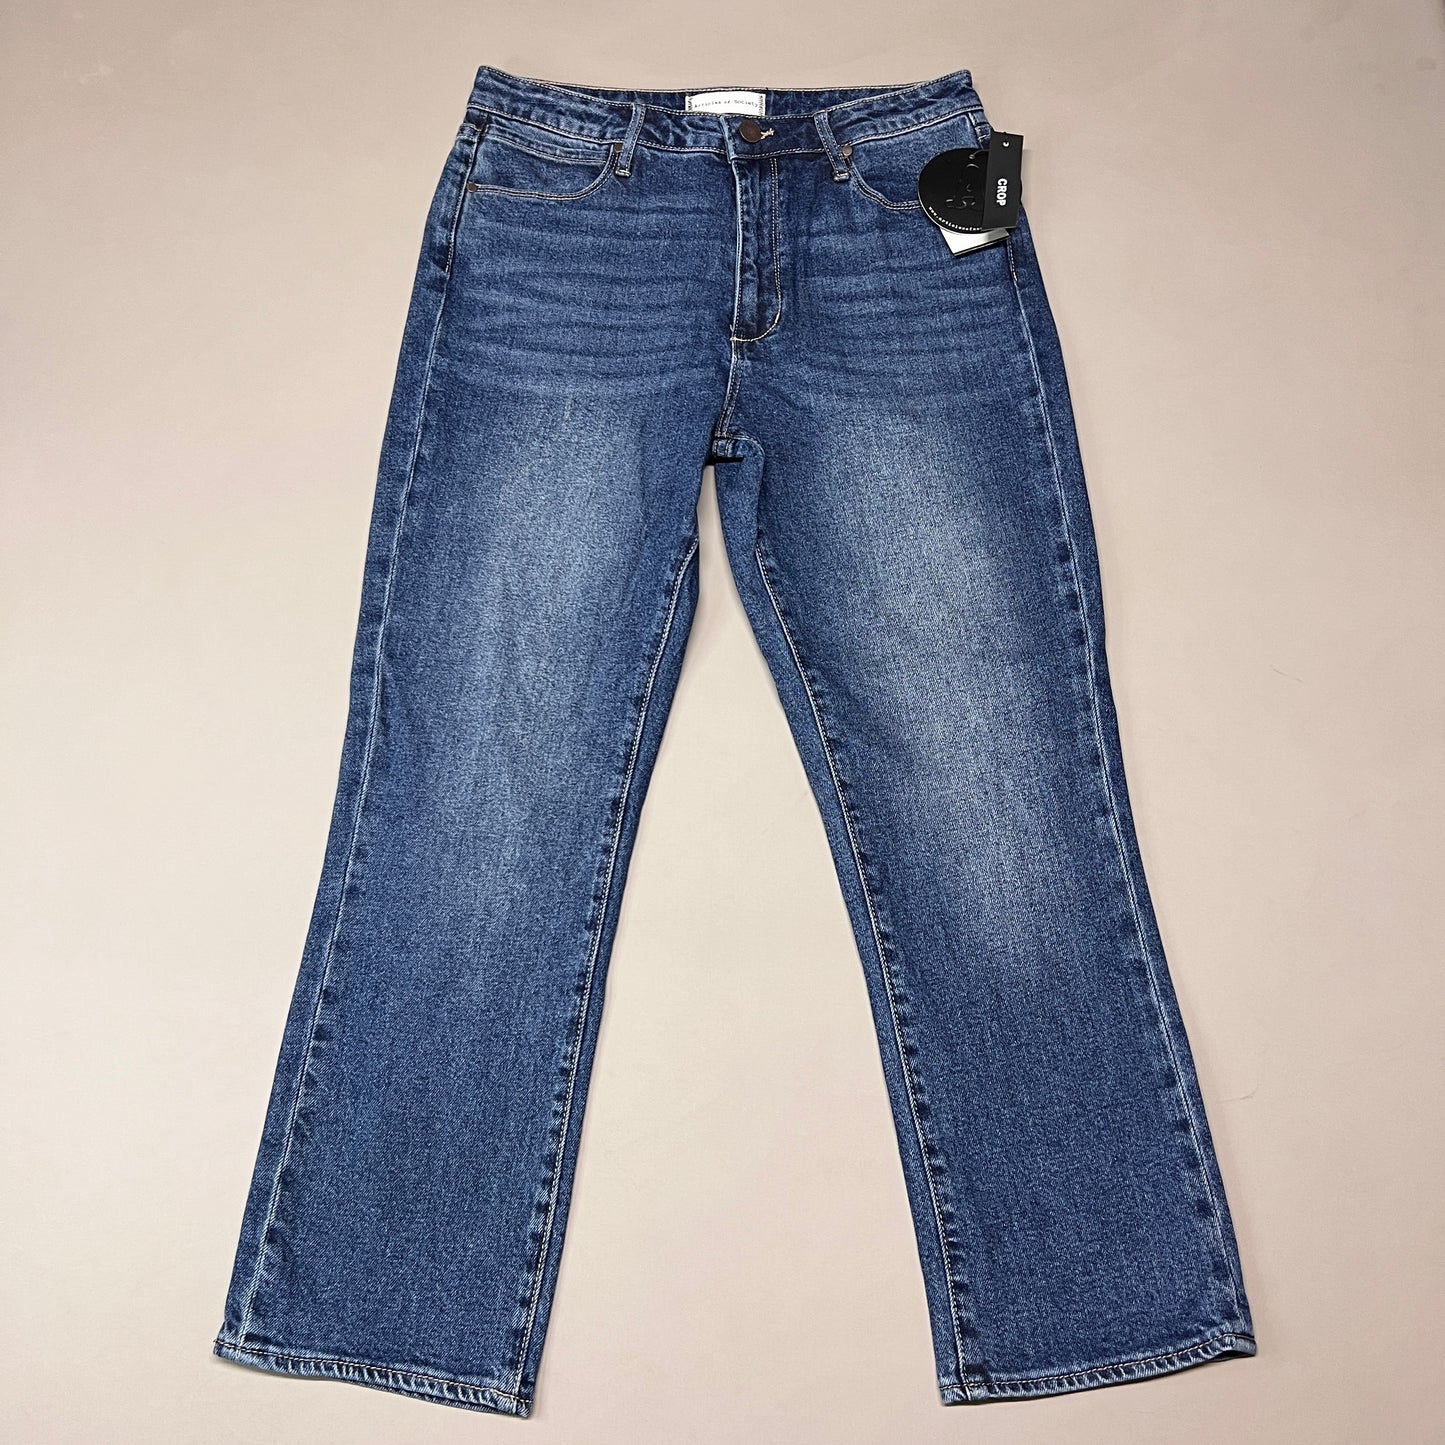 ARTICLES OF SOCIETY Ewa Beach Denim Jeans Women's Sz 27 Blue 4810TQ3-718 (New)